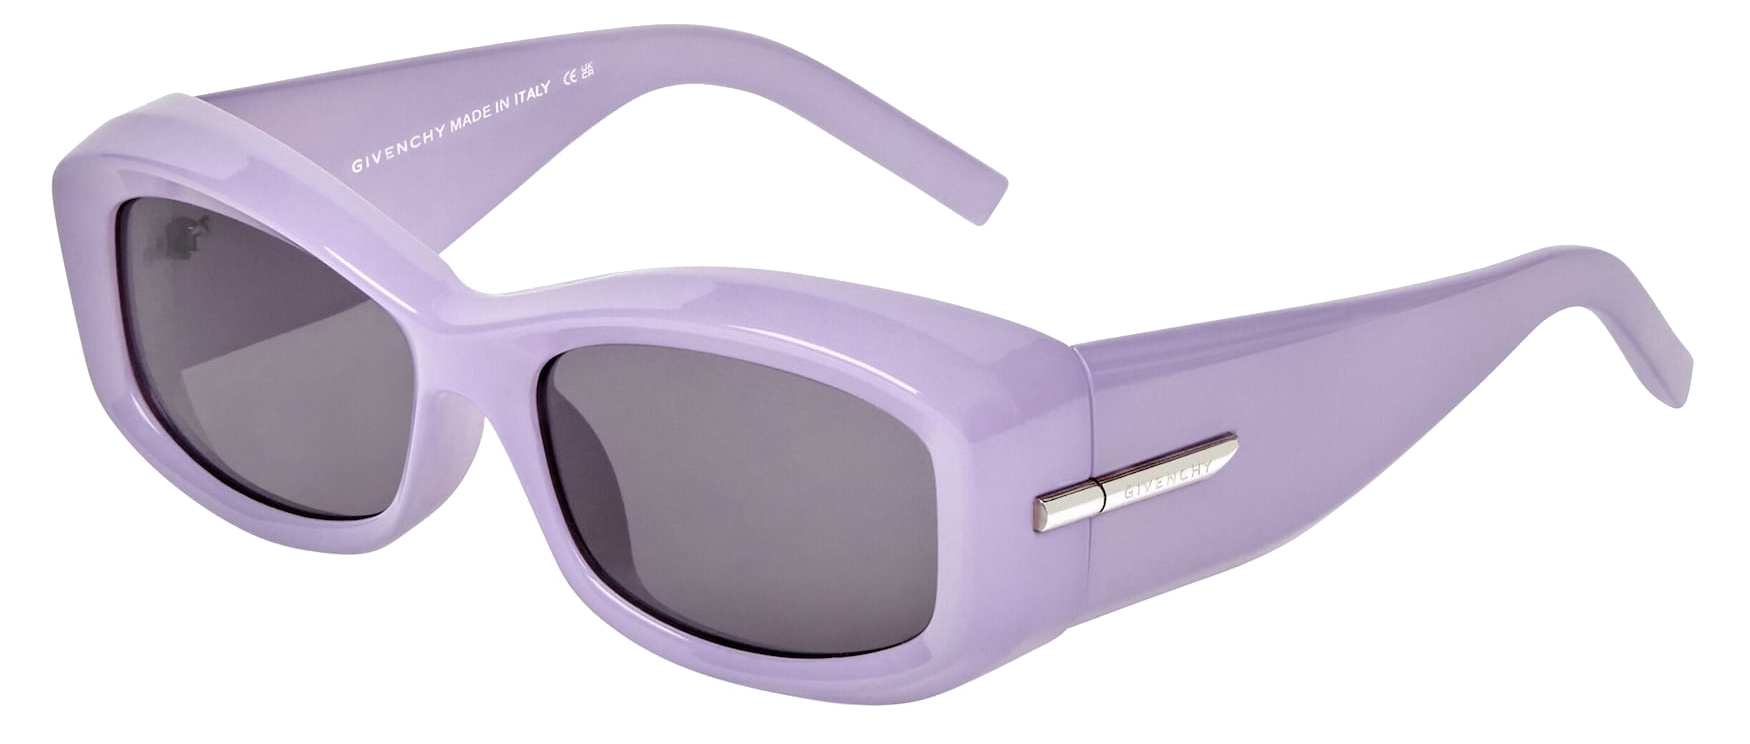 Gucci Sunglasses Glasses Case monogram tri-fold brown leather foldable hard  case